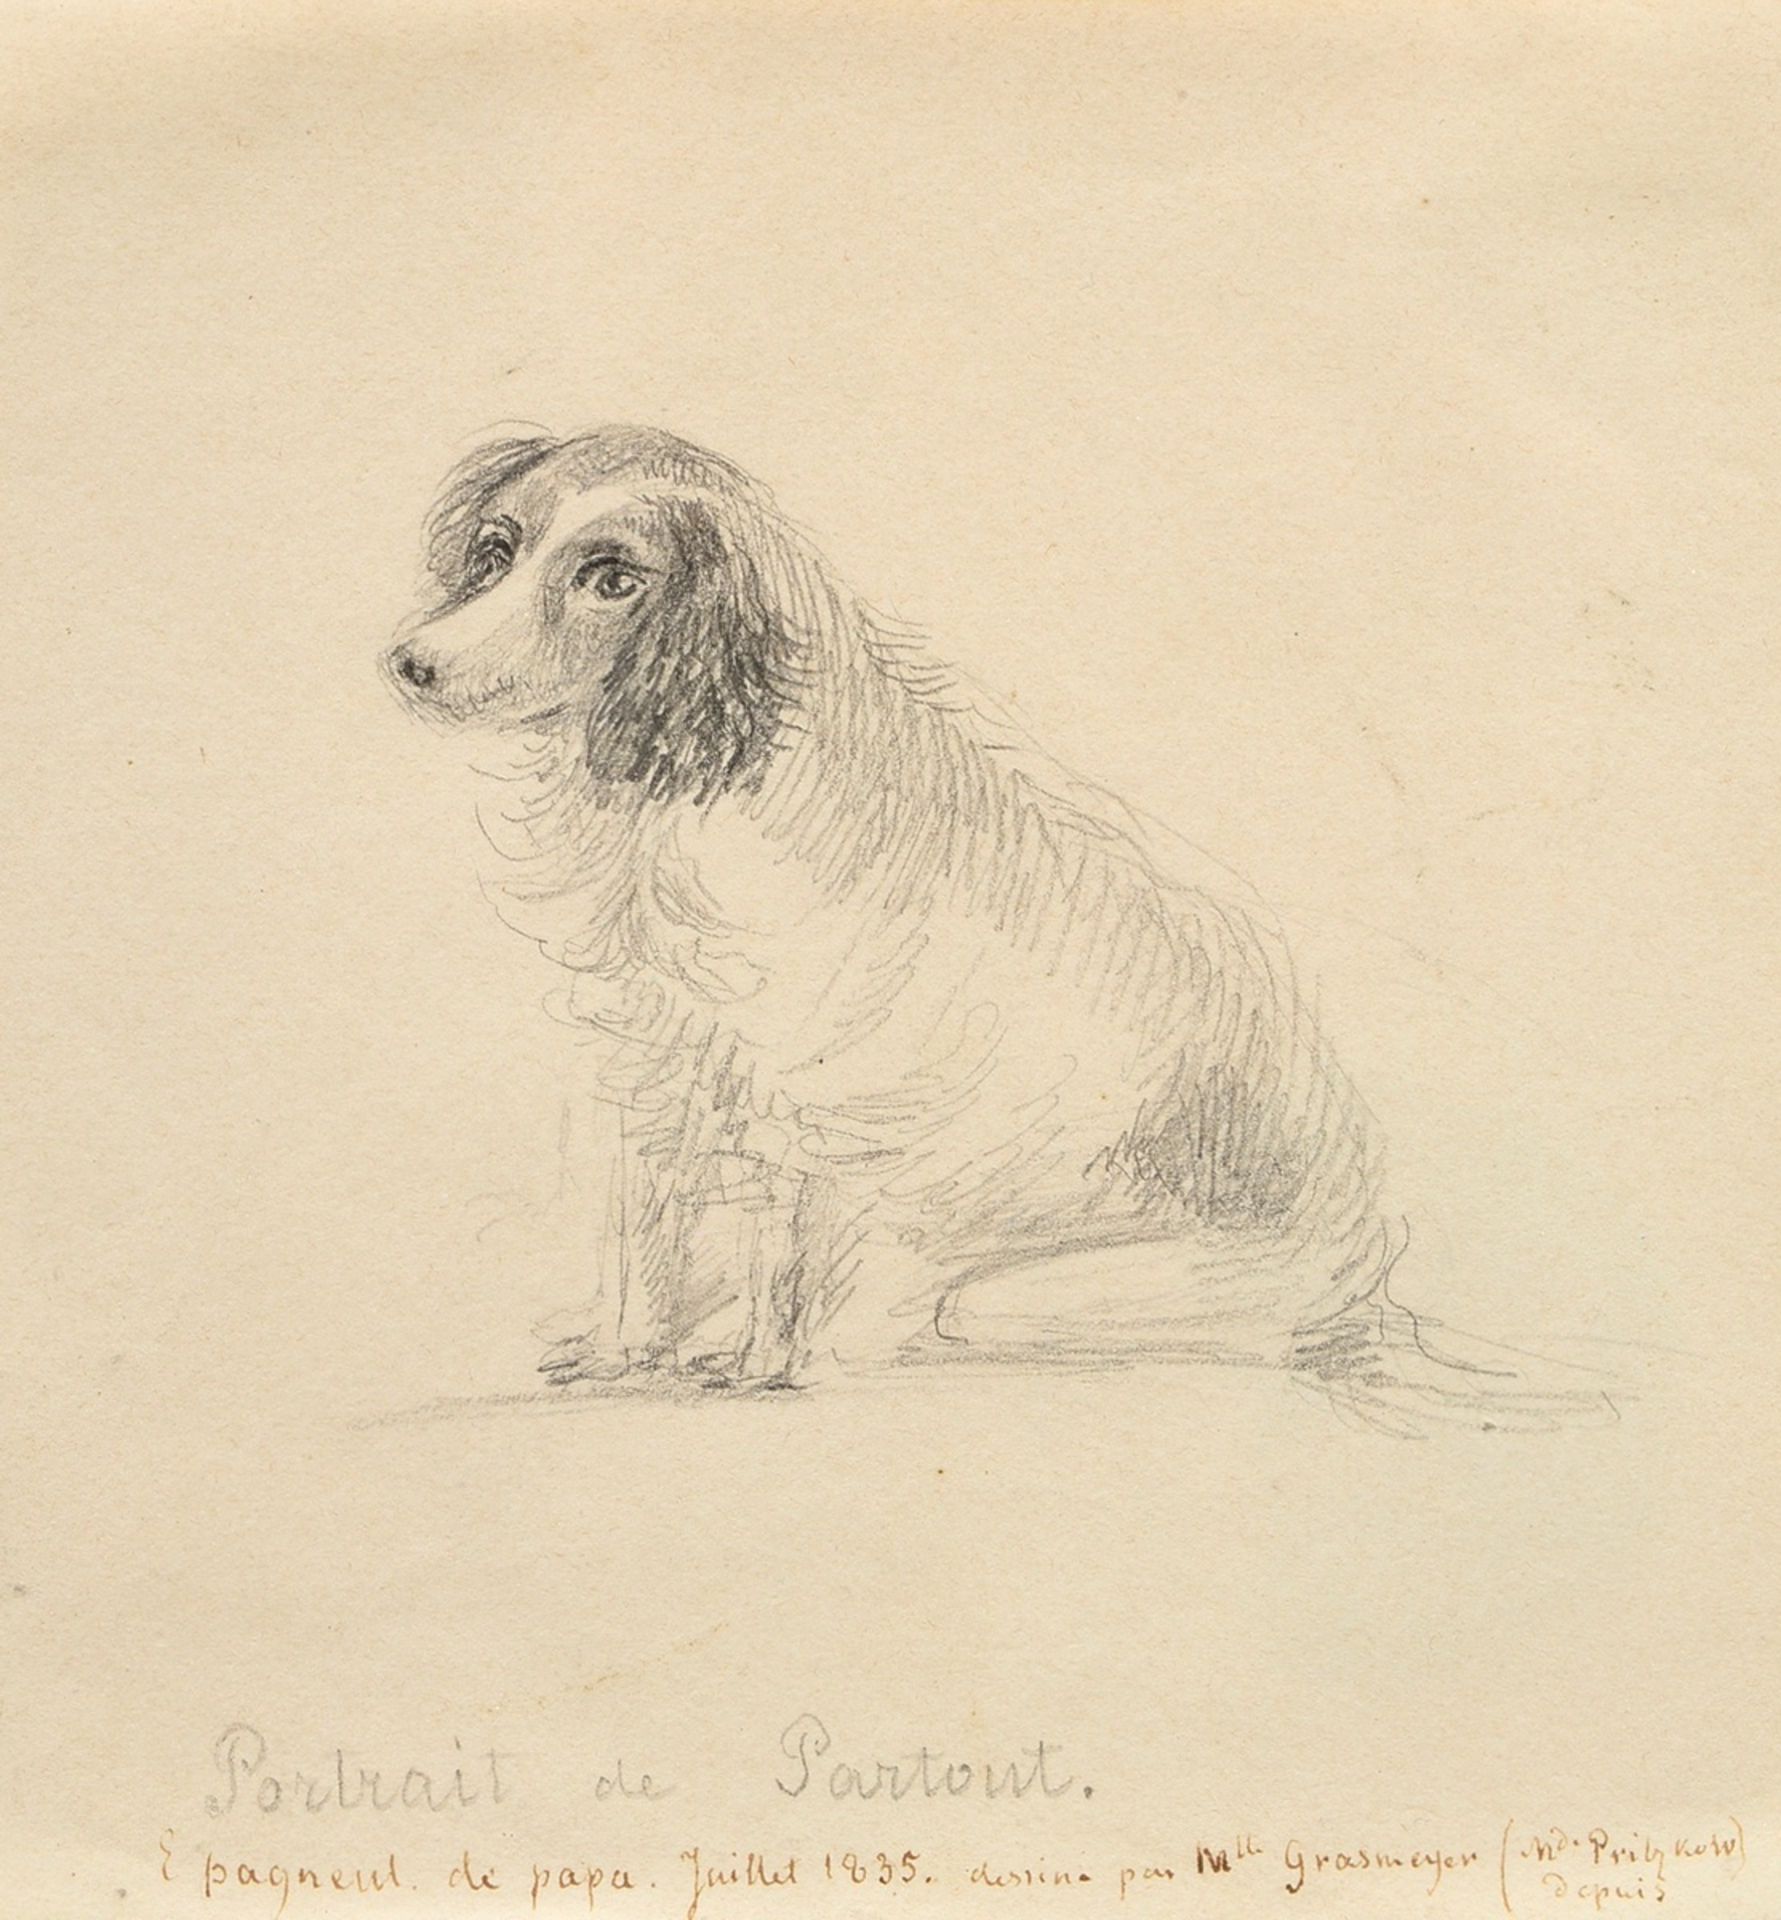 Unknown French artist (Mlle Grasmeyer) "Portrait de Partout" (Breton Spaniel) 1835, pencil, below d